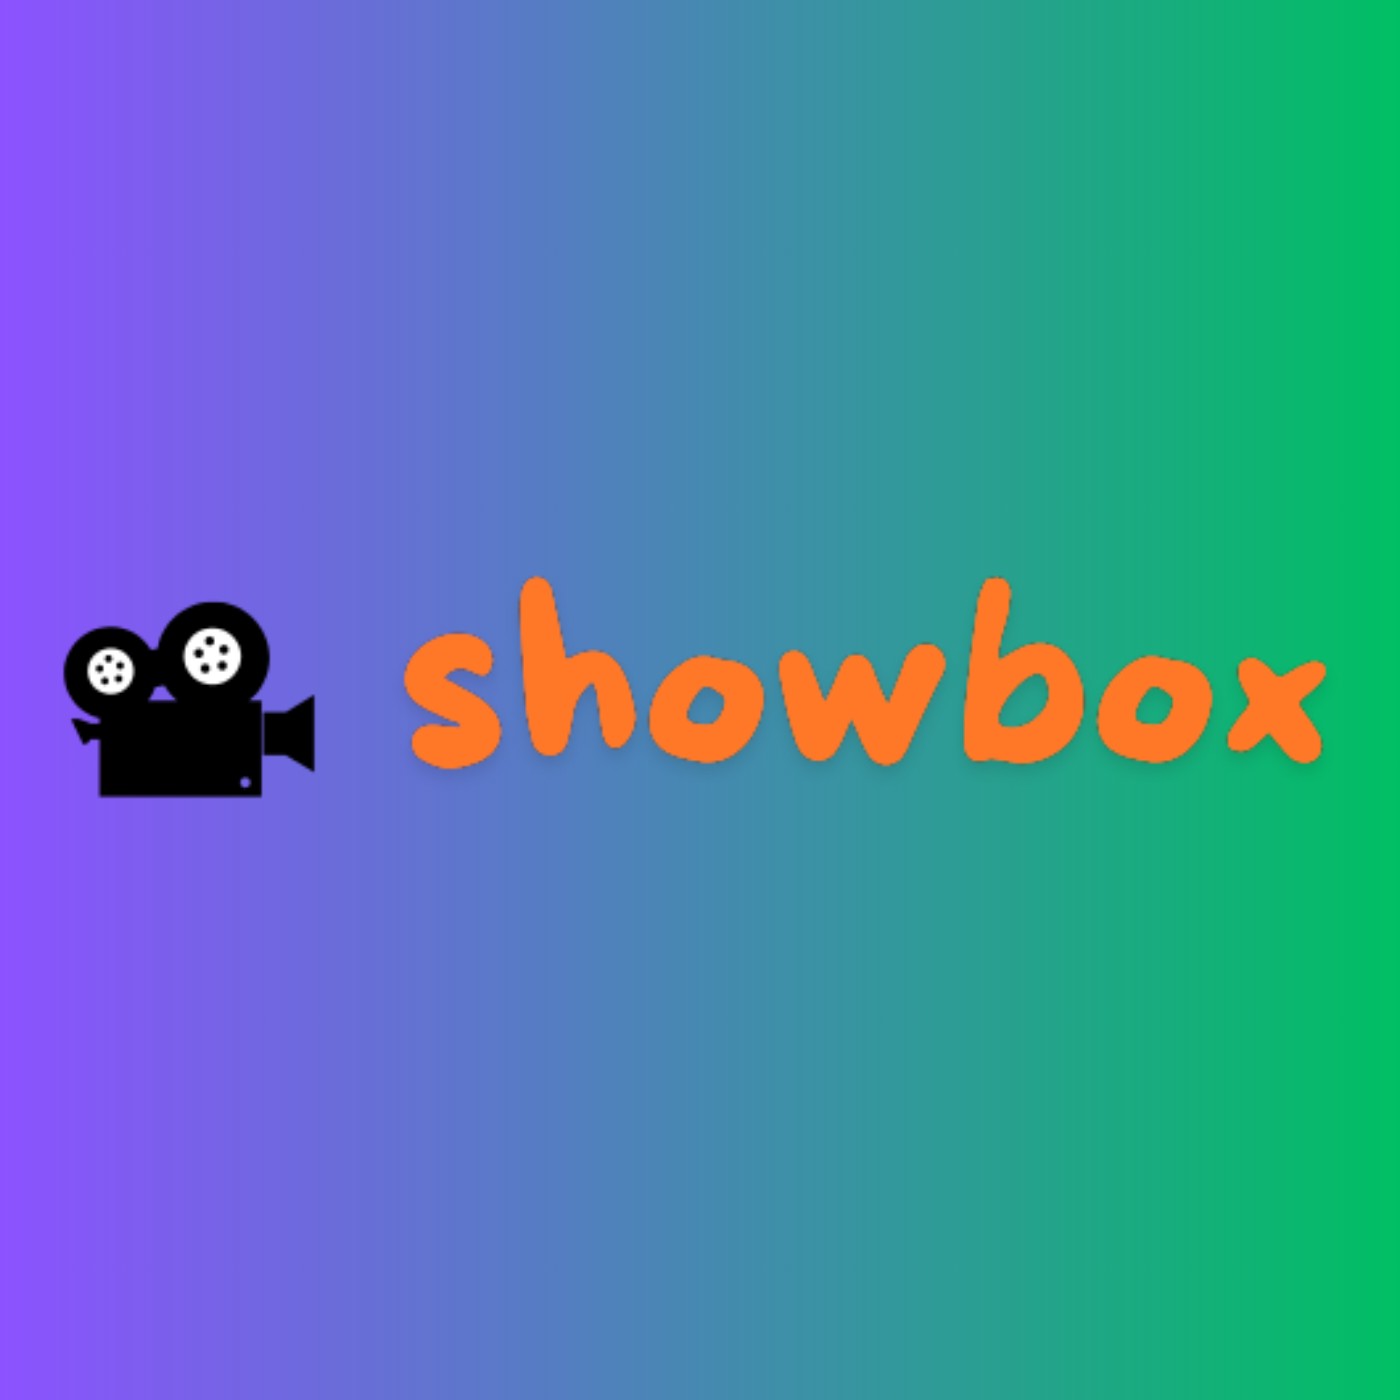 Showbox - Address to Watch Super Quality Full HD Movies